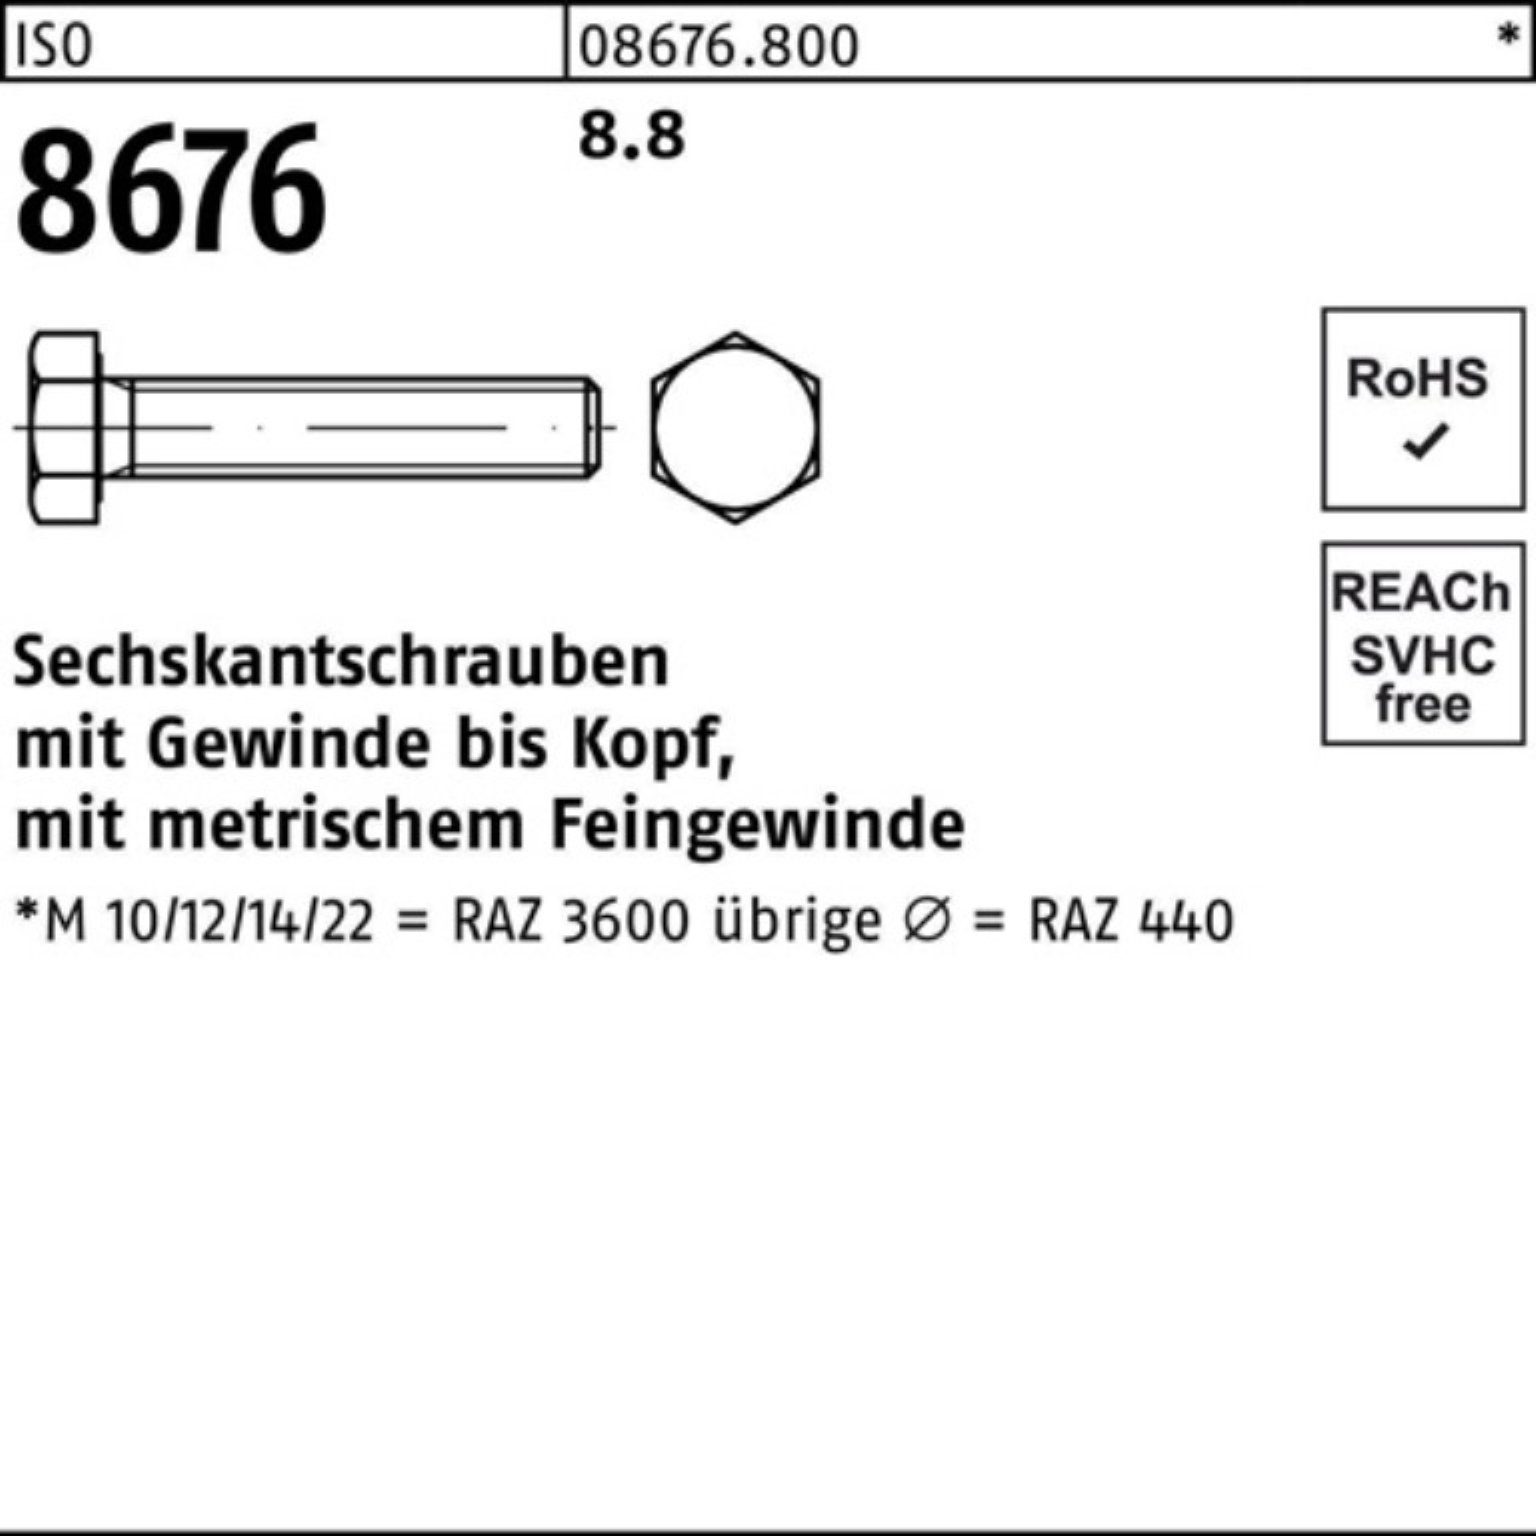 Reyher Sechskantschraube 100er 8.8 Pack 55 VG M10x1,25x 100 I Sechskantschraube Stück 8676 ISO